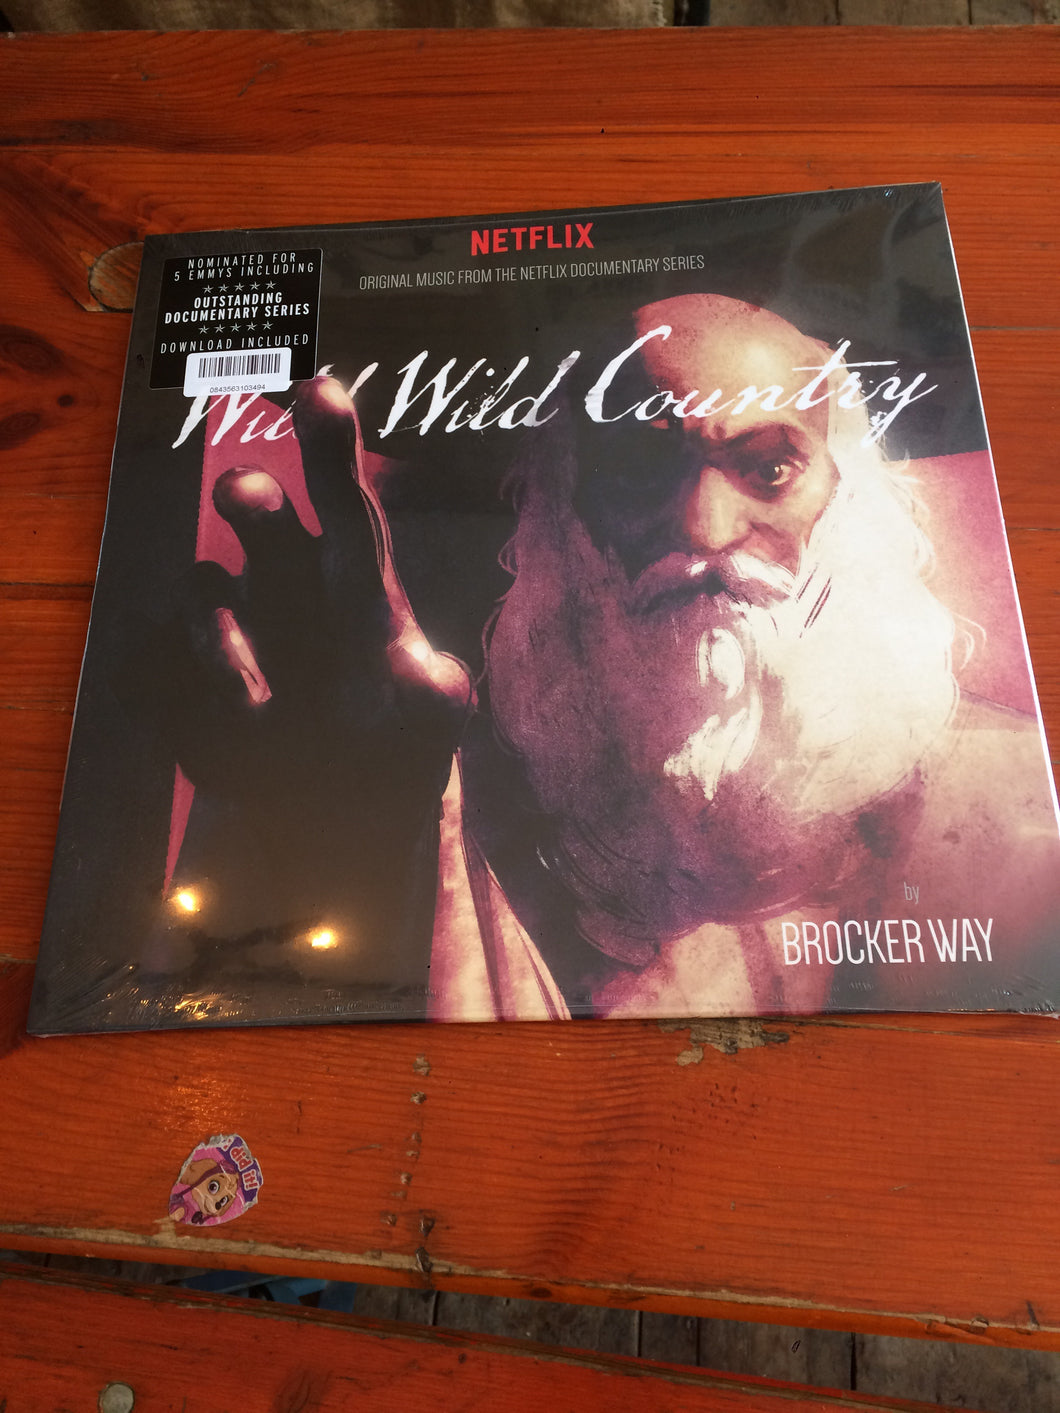 Wild Wild Country - Original Music From The Netflix Documentary Series by Brocker Way